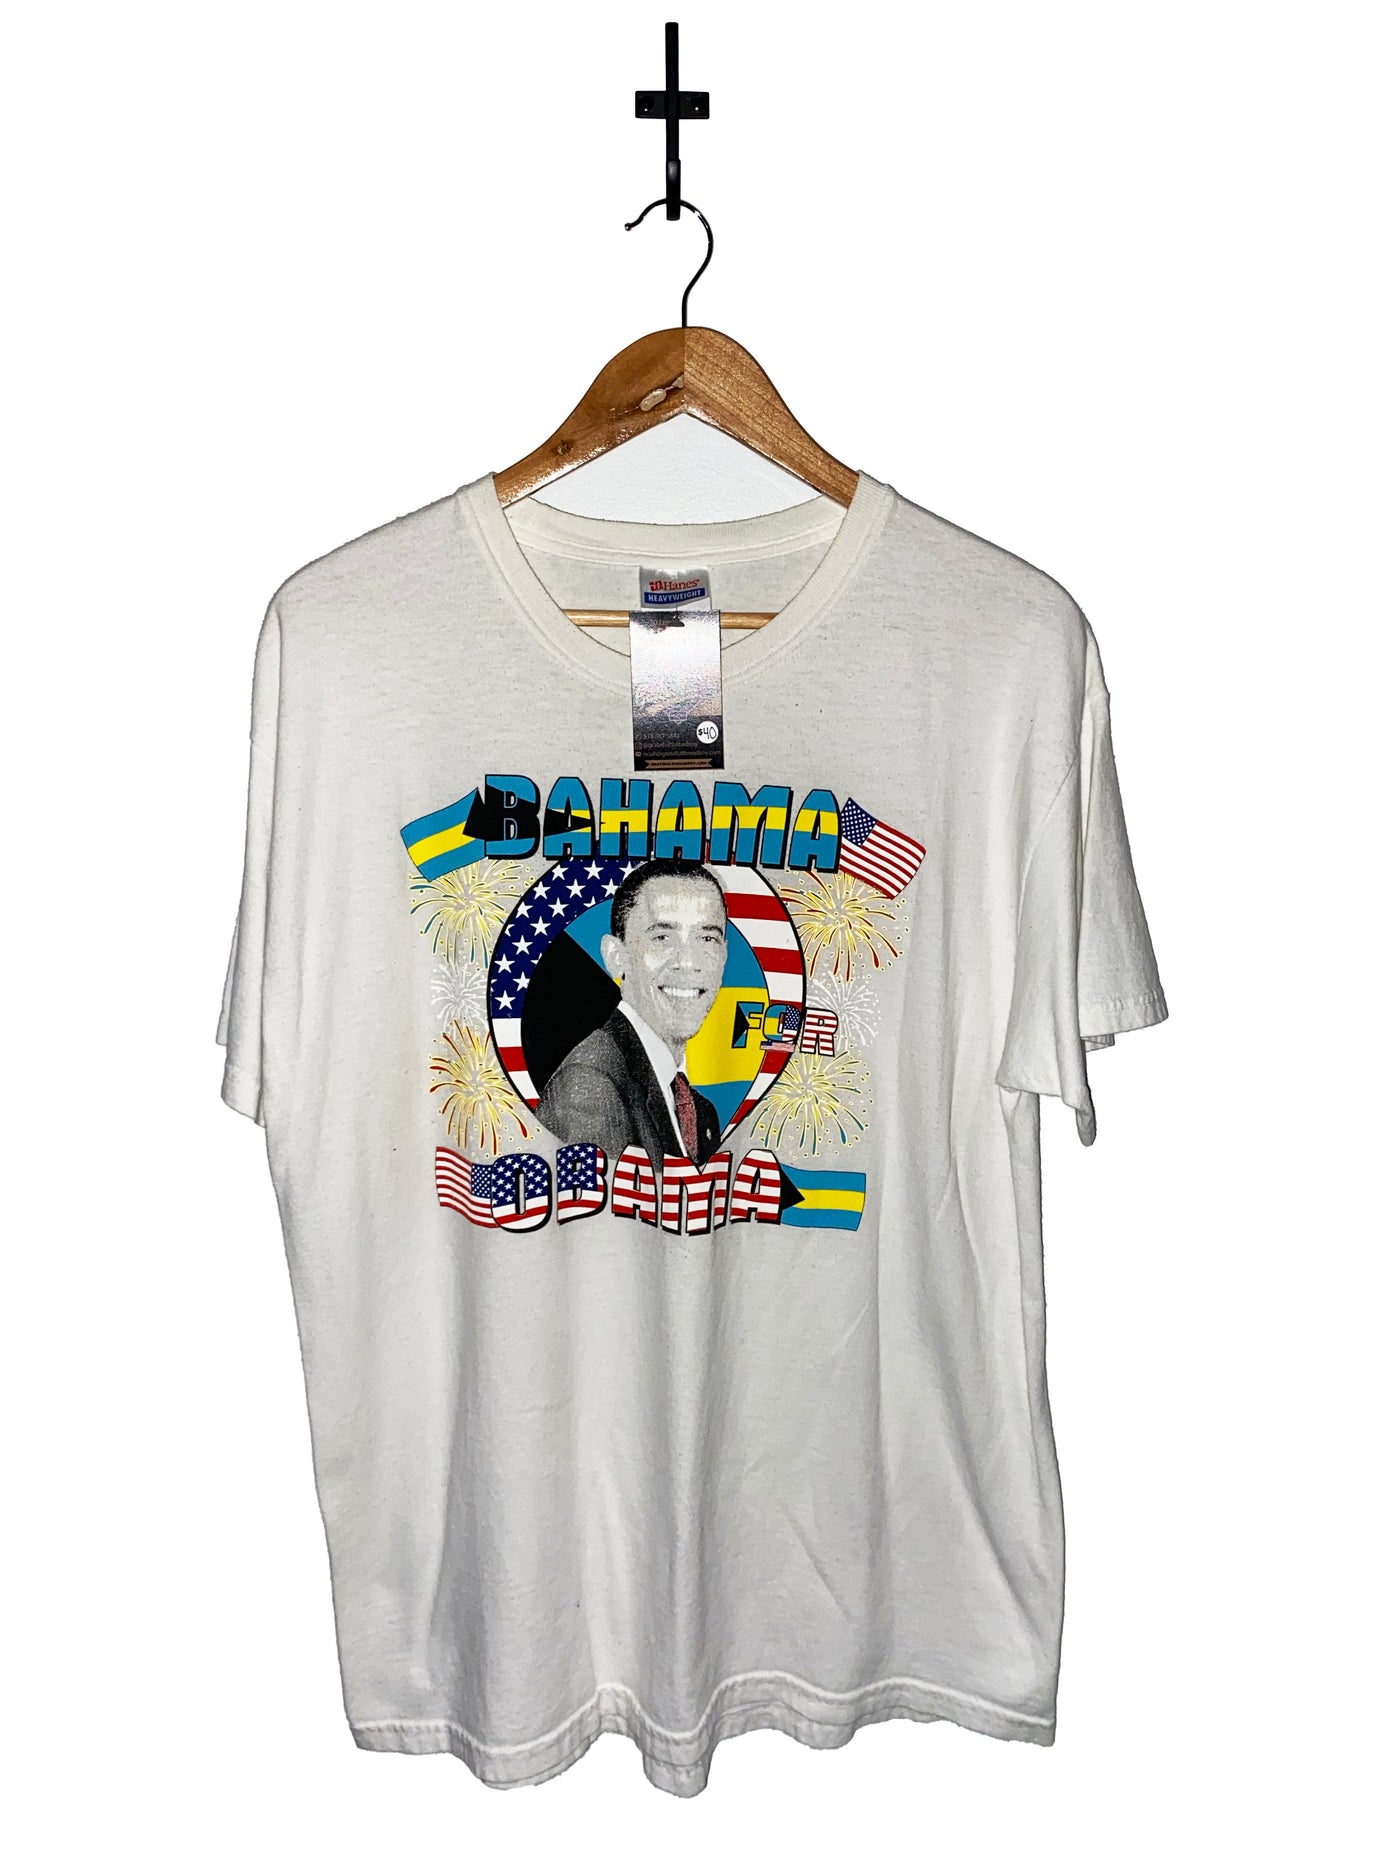 Y2K Bahamas for Obama T-Shirt